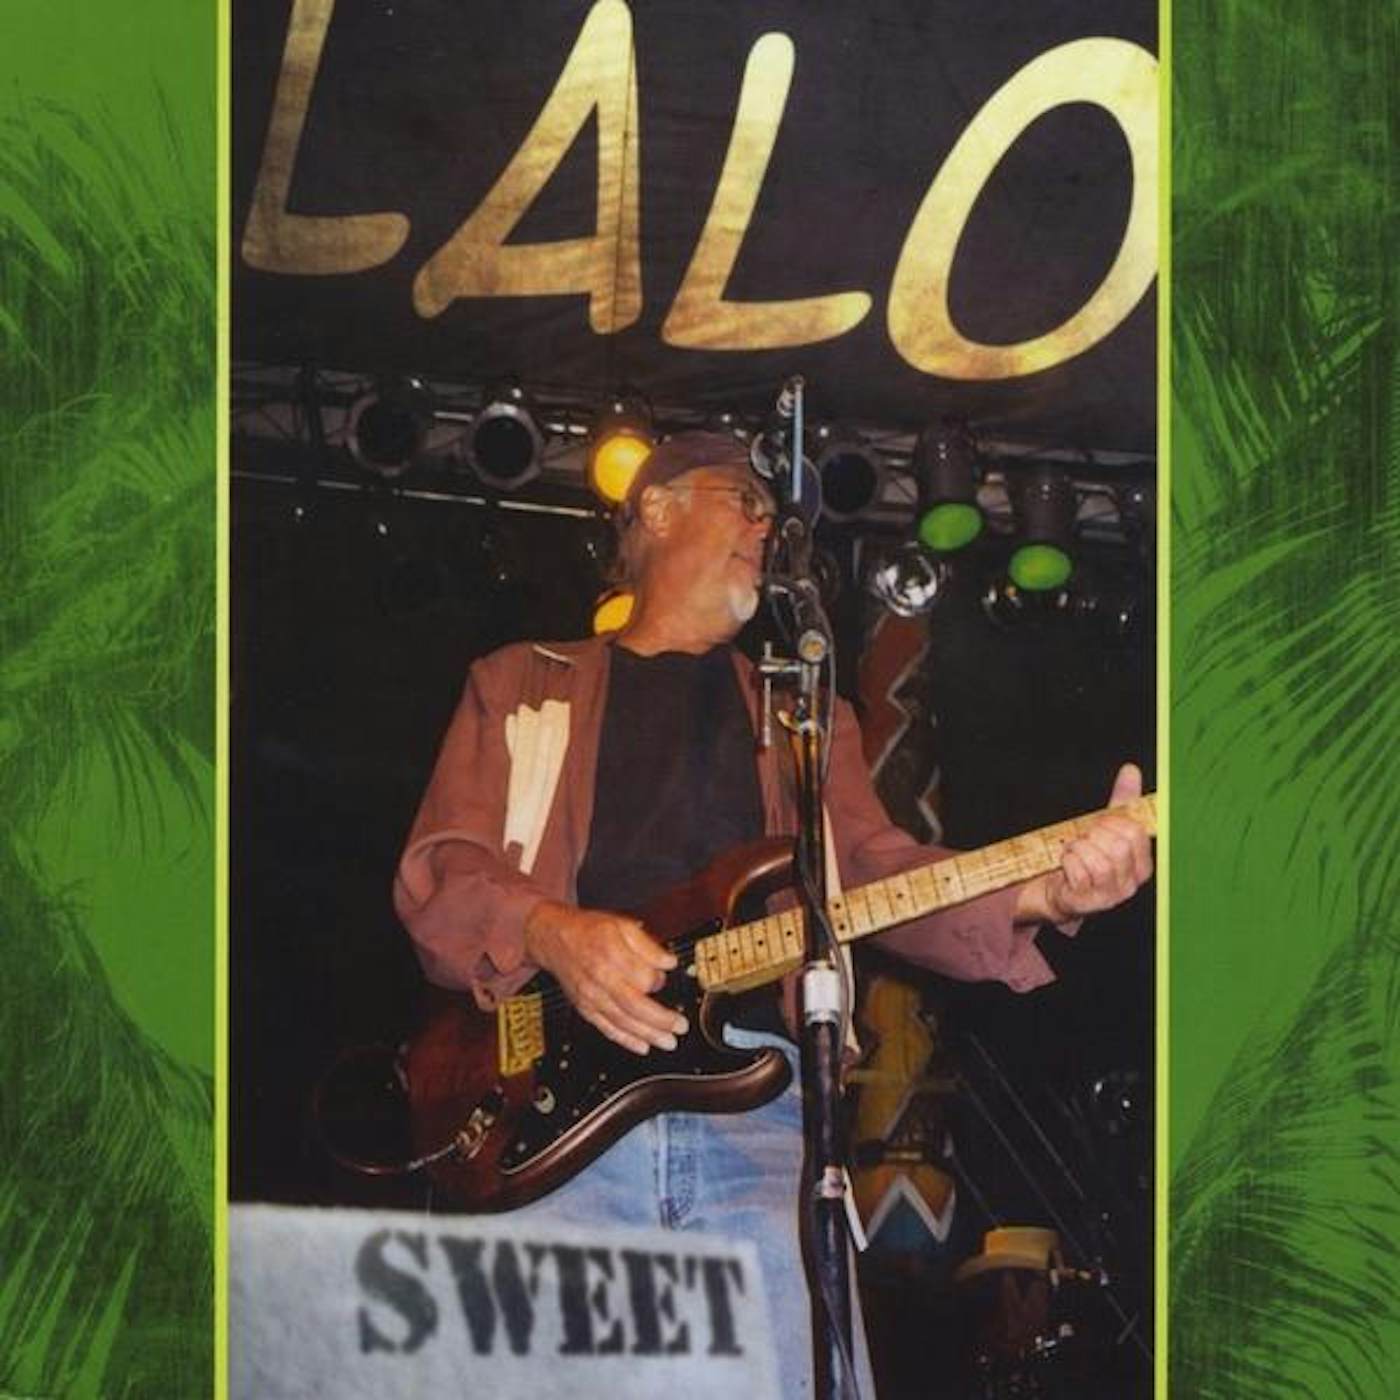 Lalo SWEET CD